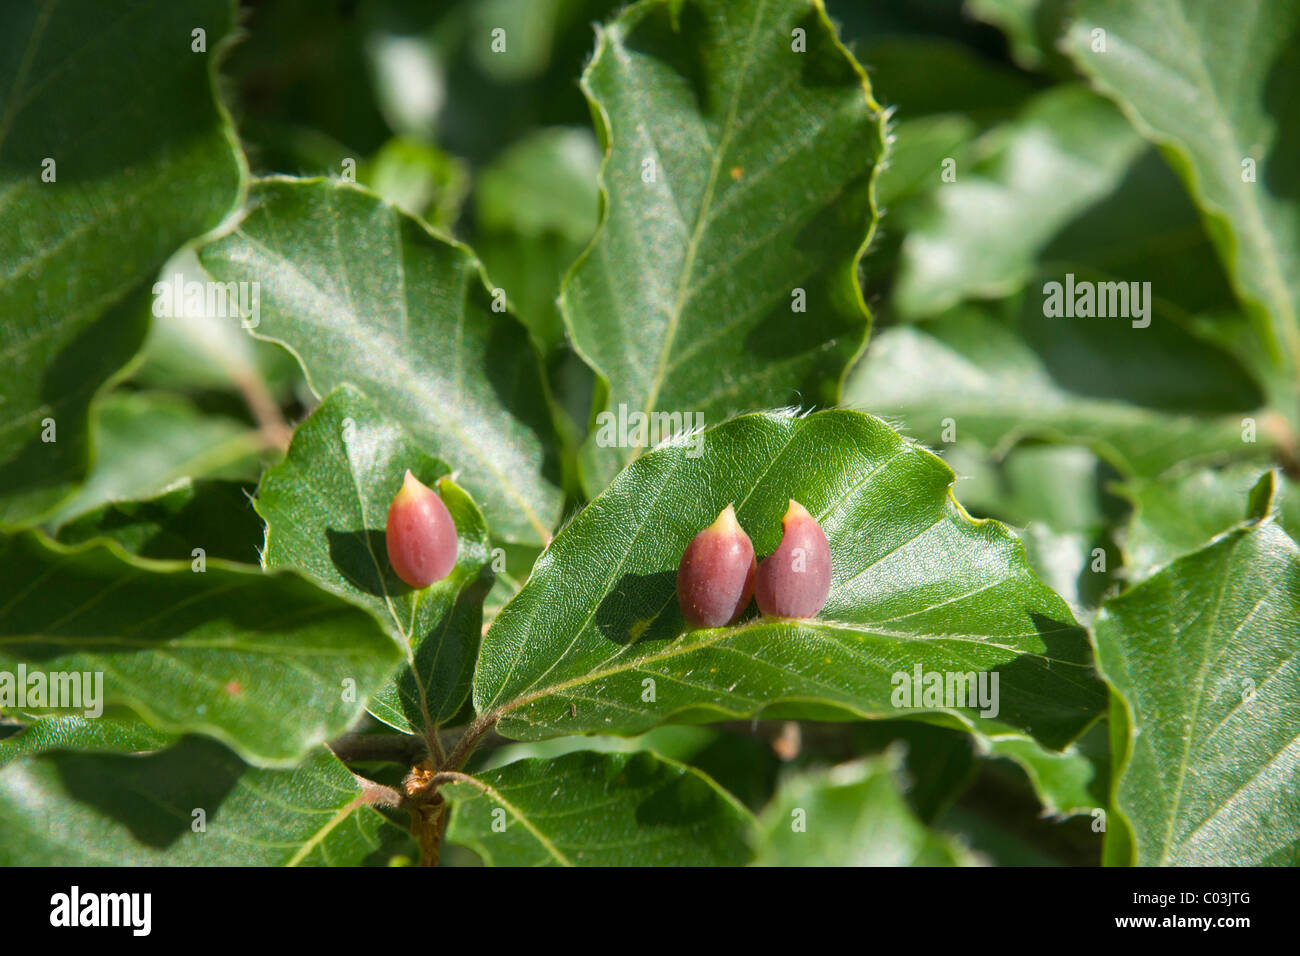 Galls of the Gall Midge (Mikiola fagi) on leaves of Common Beech (Fagus sylvatica) Stock Photo